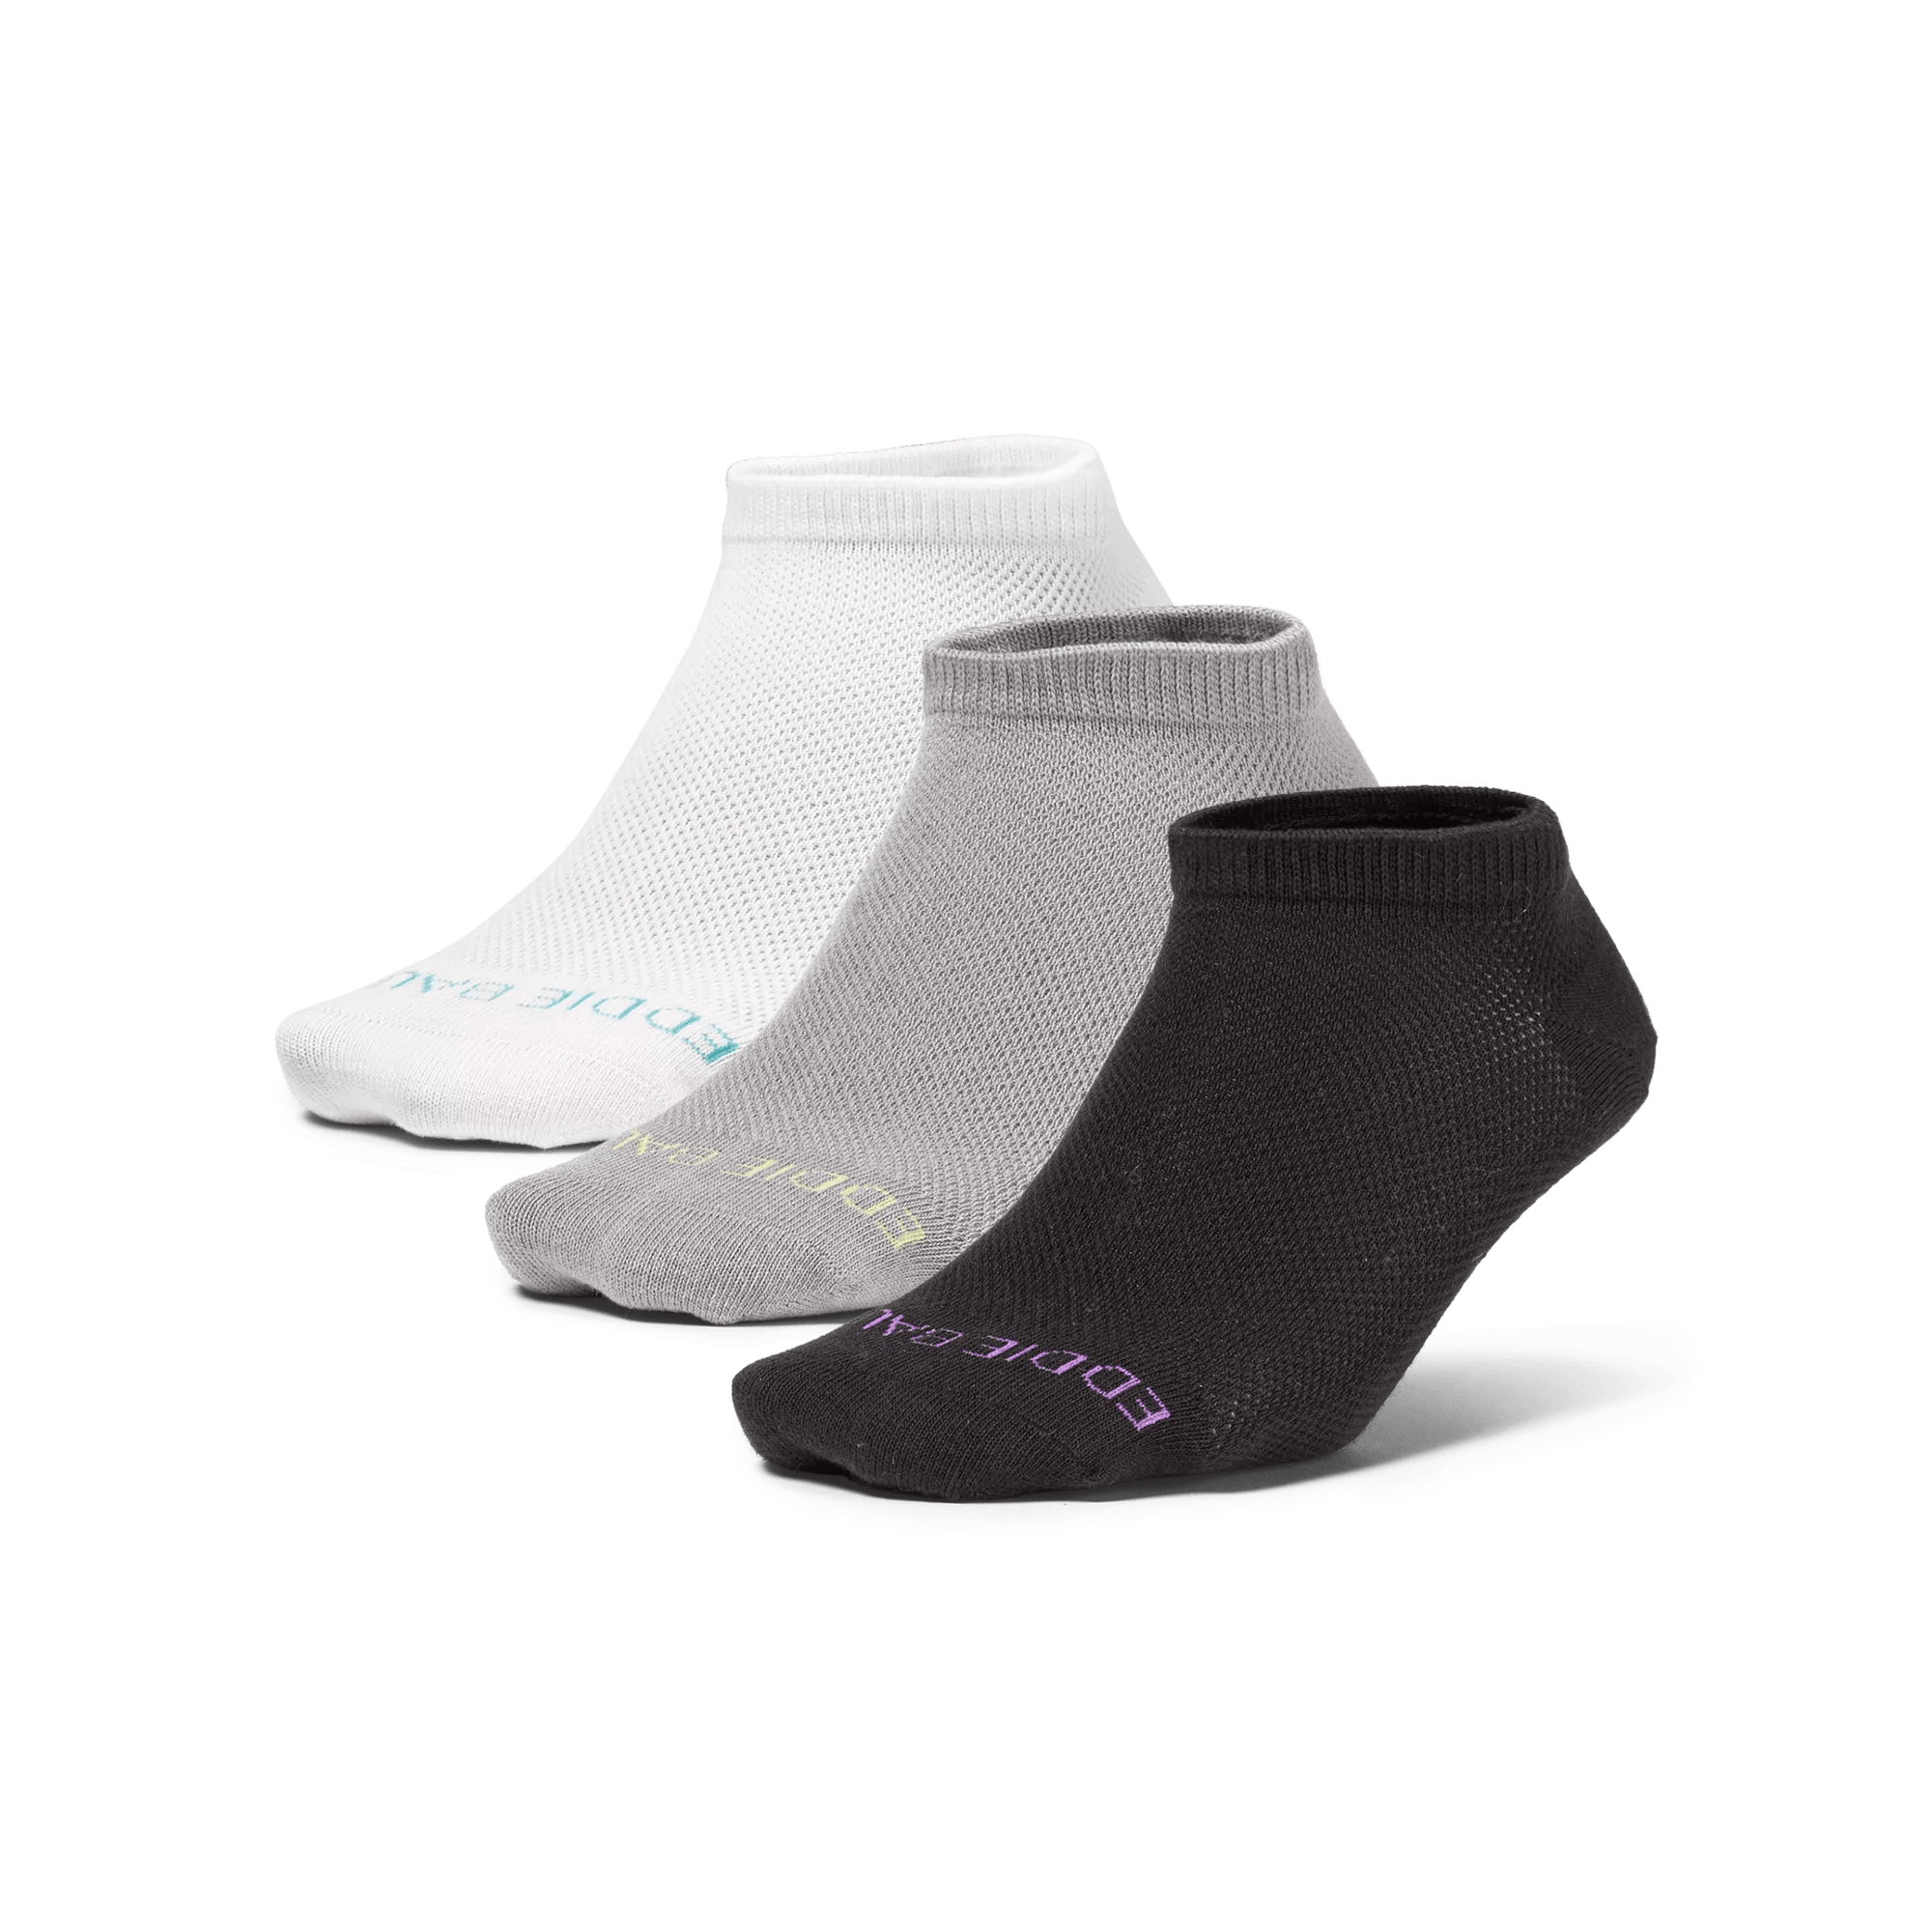 Solid Mesh Socks - 3 Pack